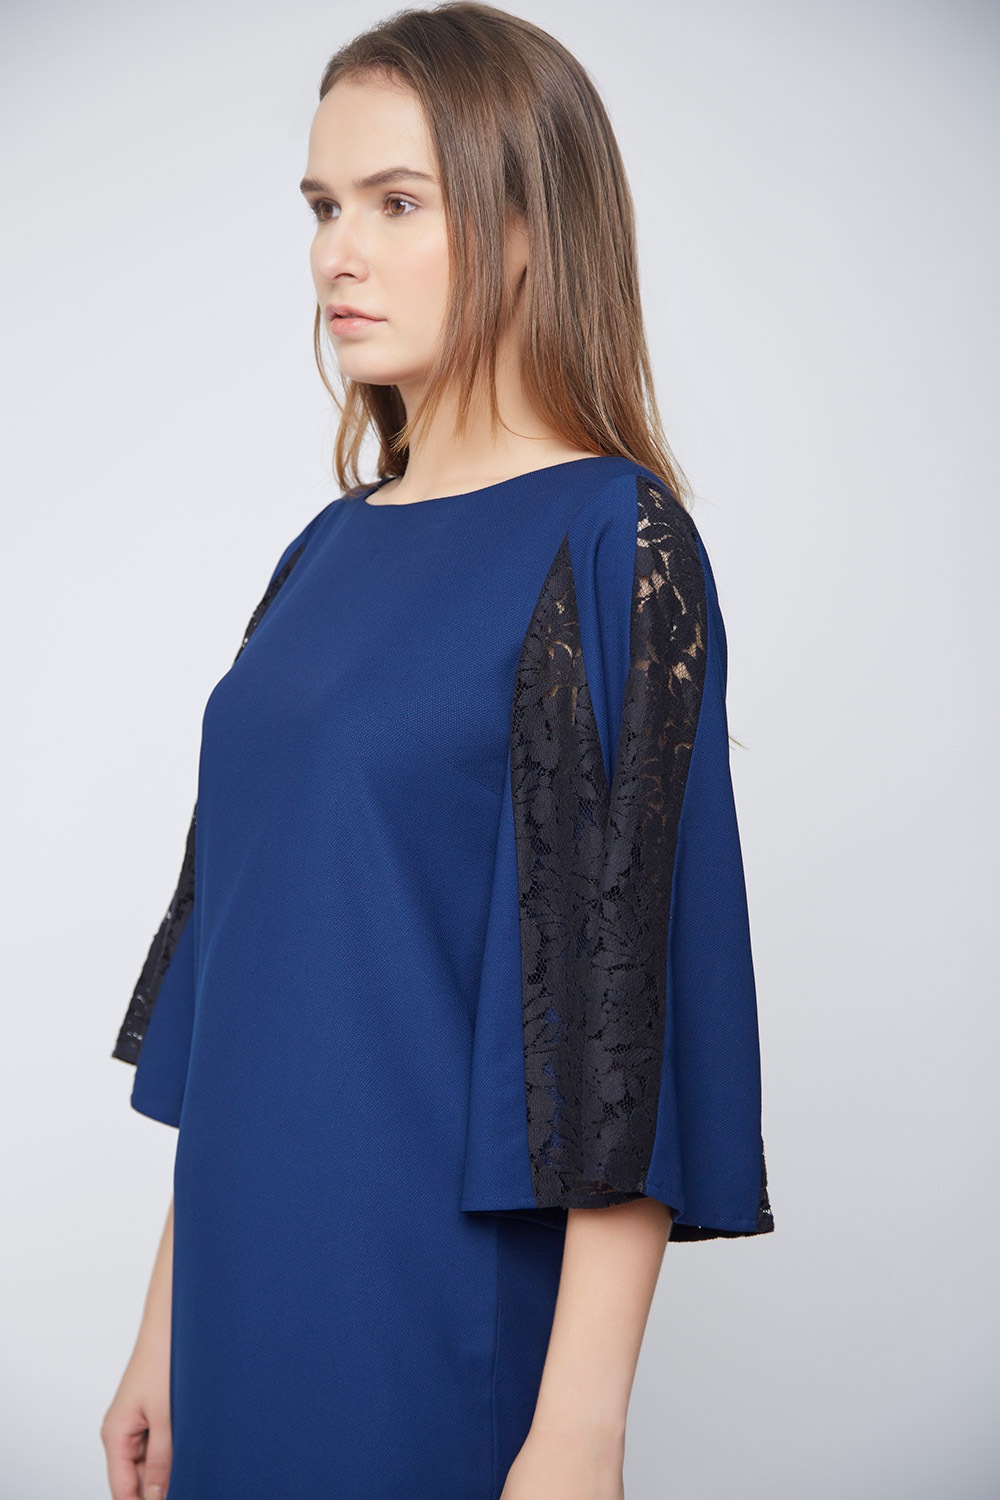 Blue Dress Black Net Pannel Sleeves -2